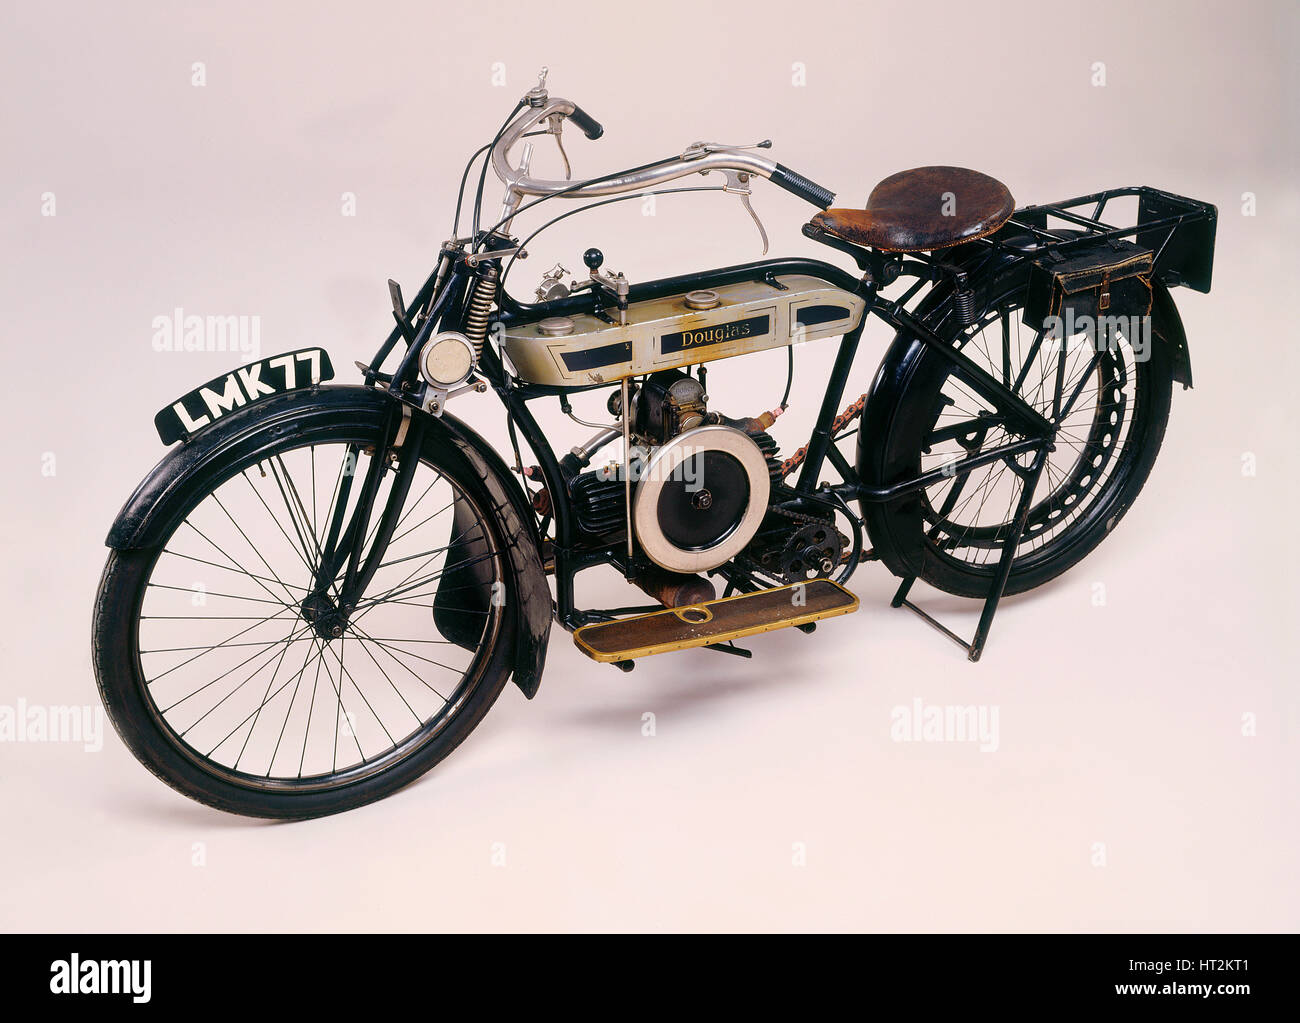 1913 Douglas motorcycle. Artist: Unknown. Stock Photo